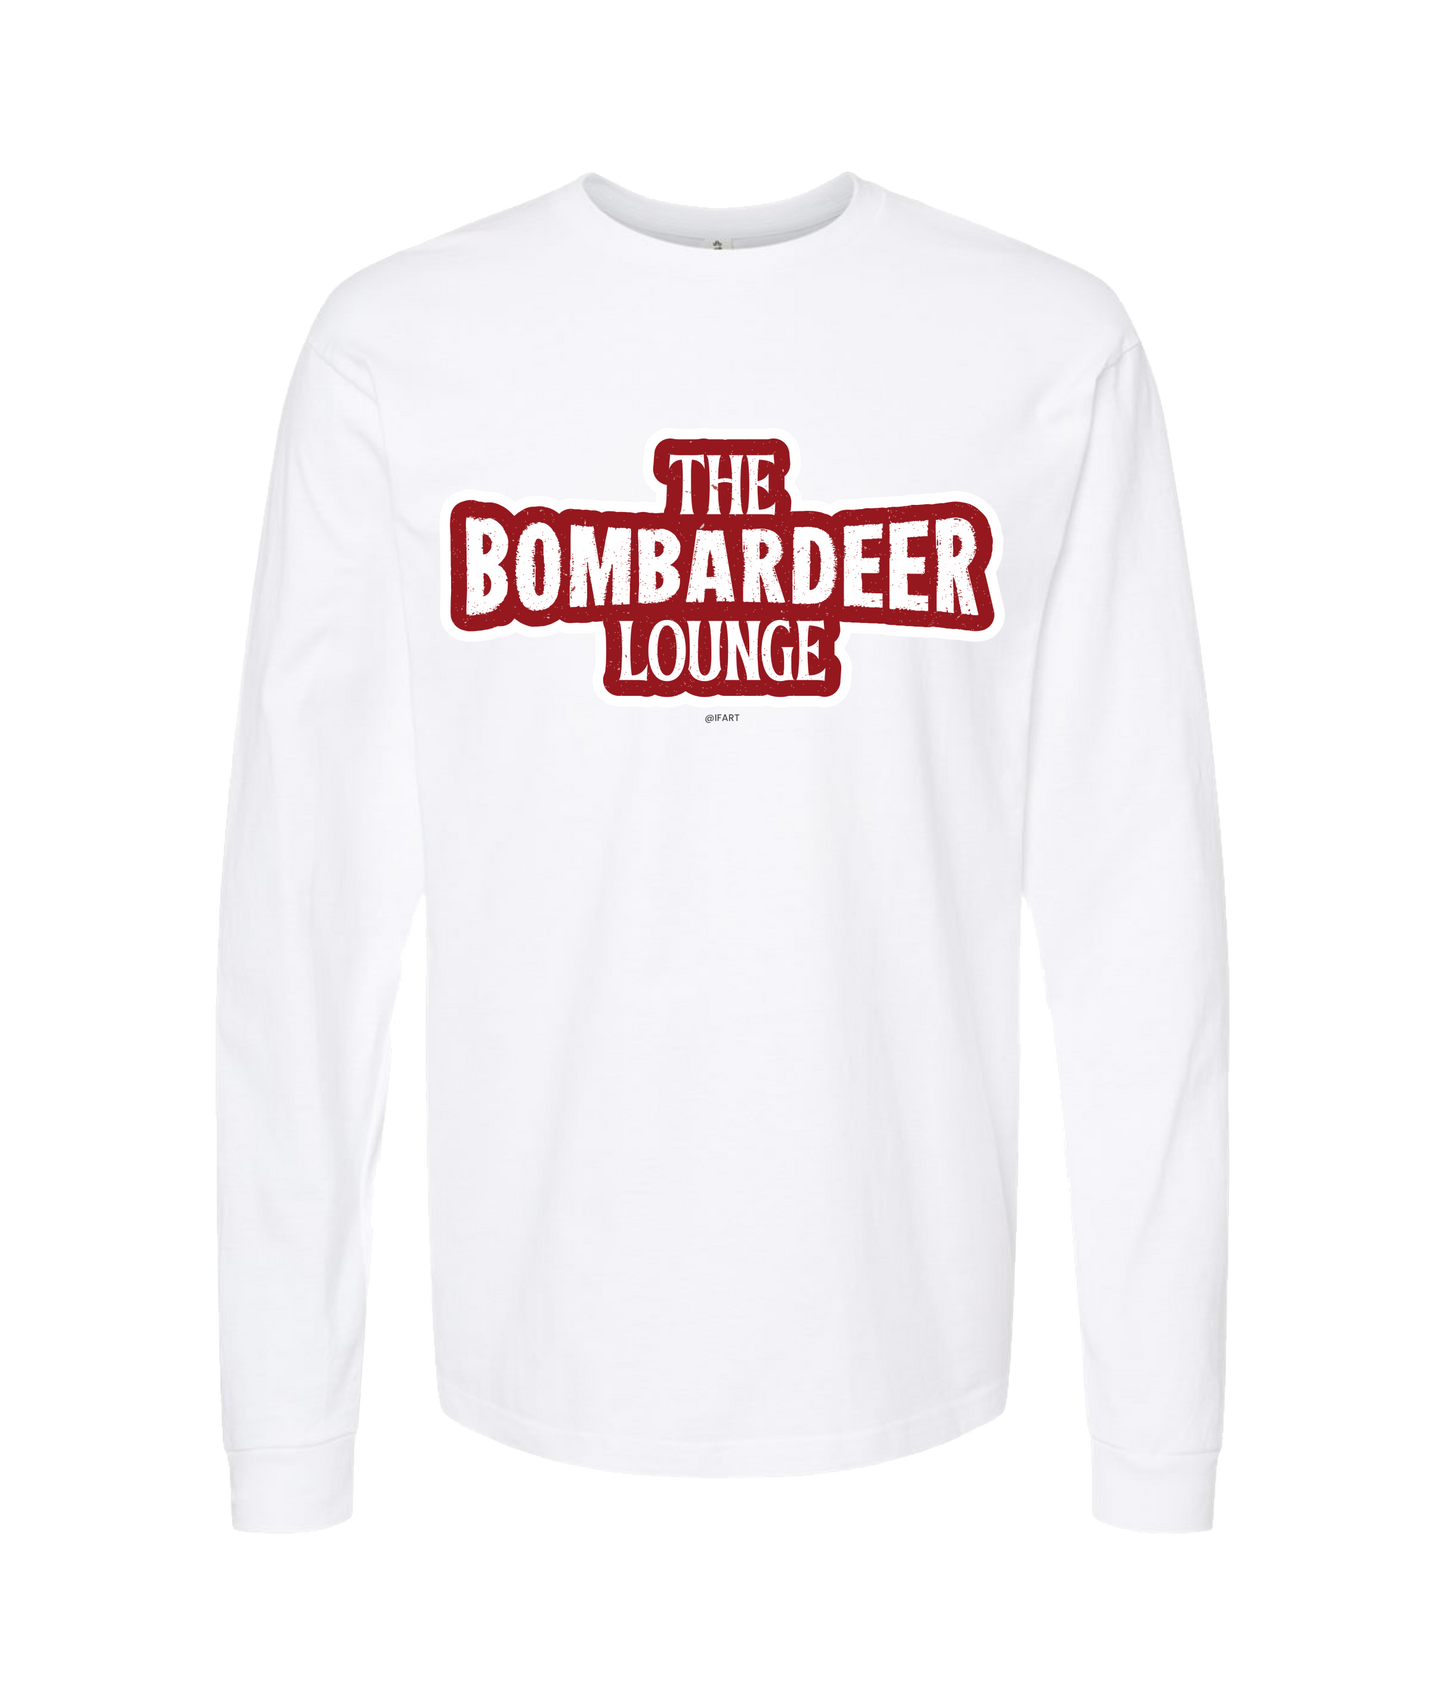 iFart - BOMBARDEER LOUNGE - White Long Sleeve T